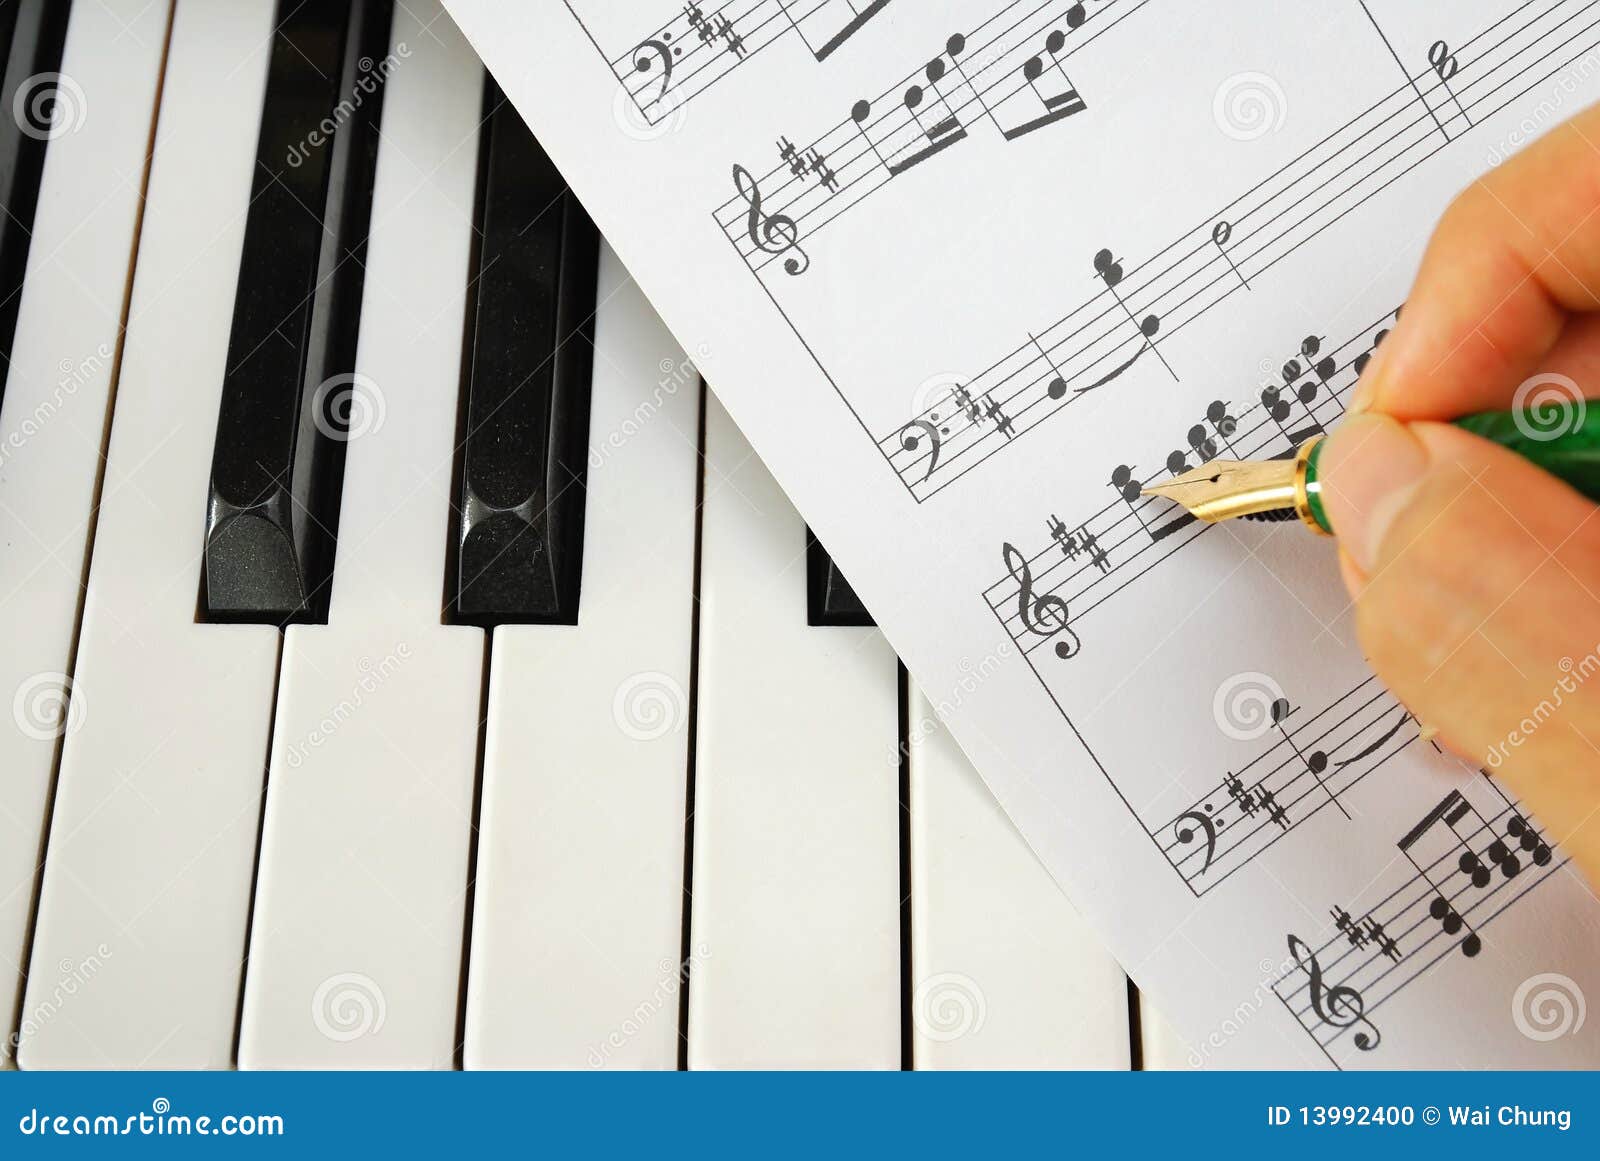 Writing on Music Score with Pen on Piano Keyboard Stock Photo